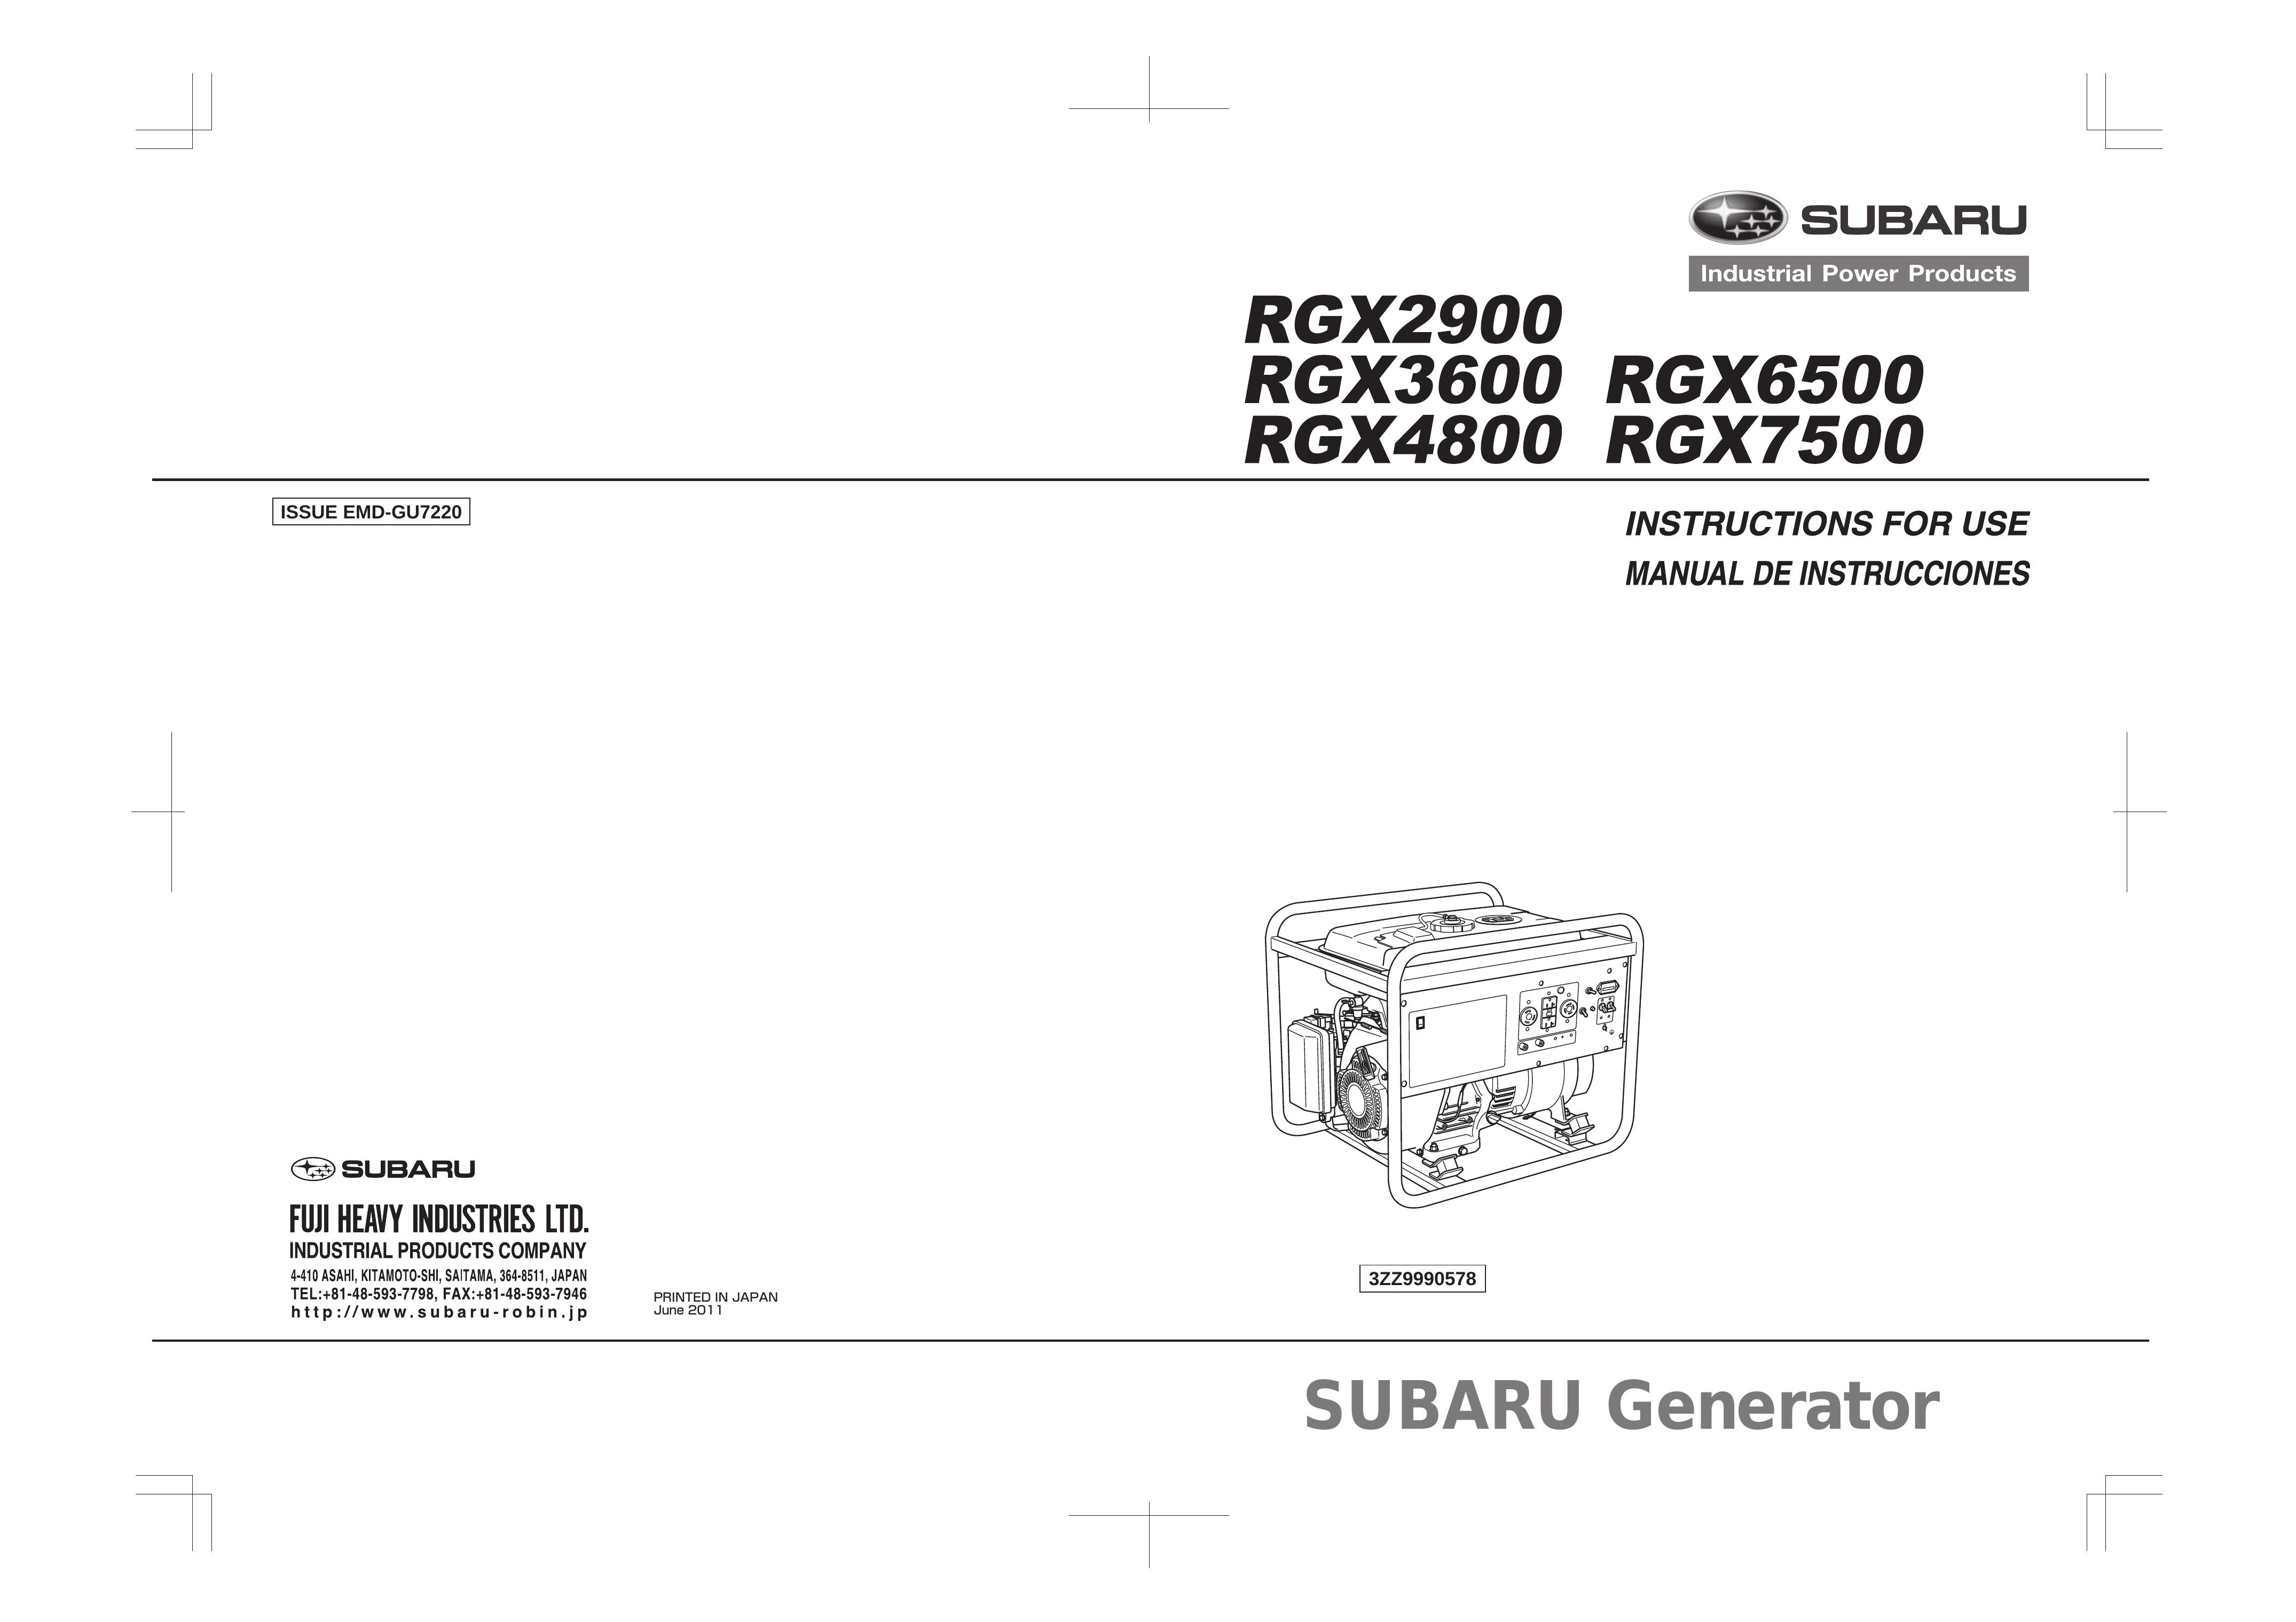 Subaru RGX3600 Portable Generator User Manual